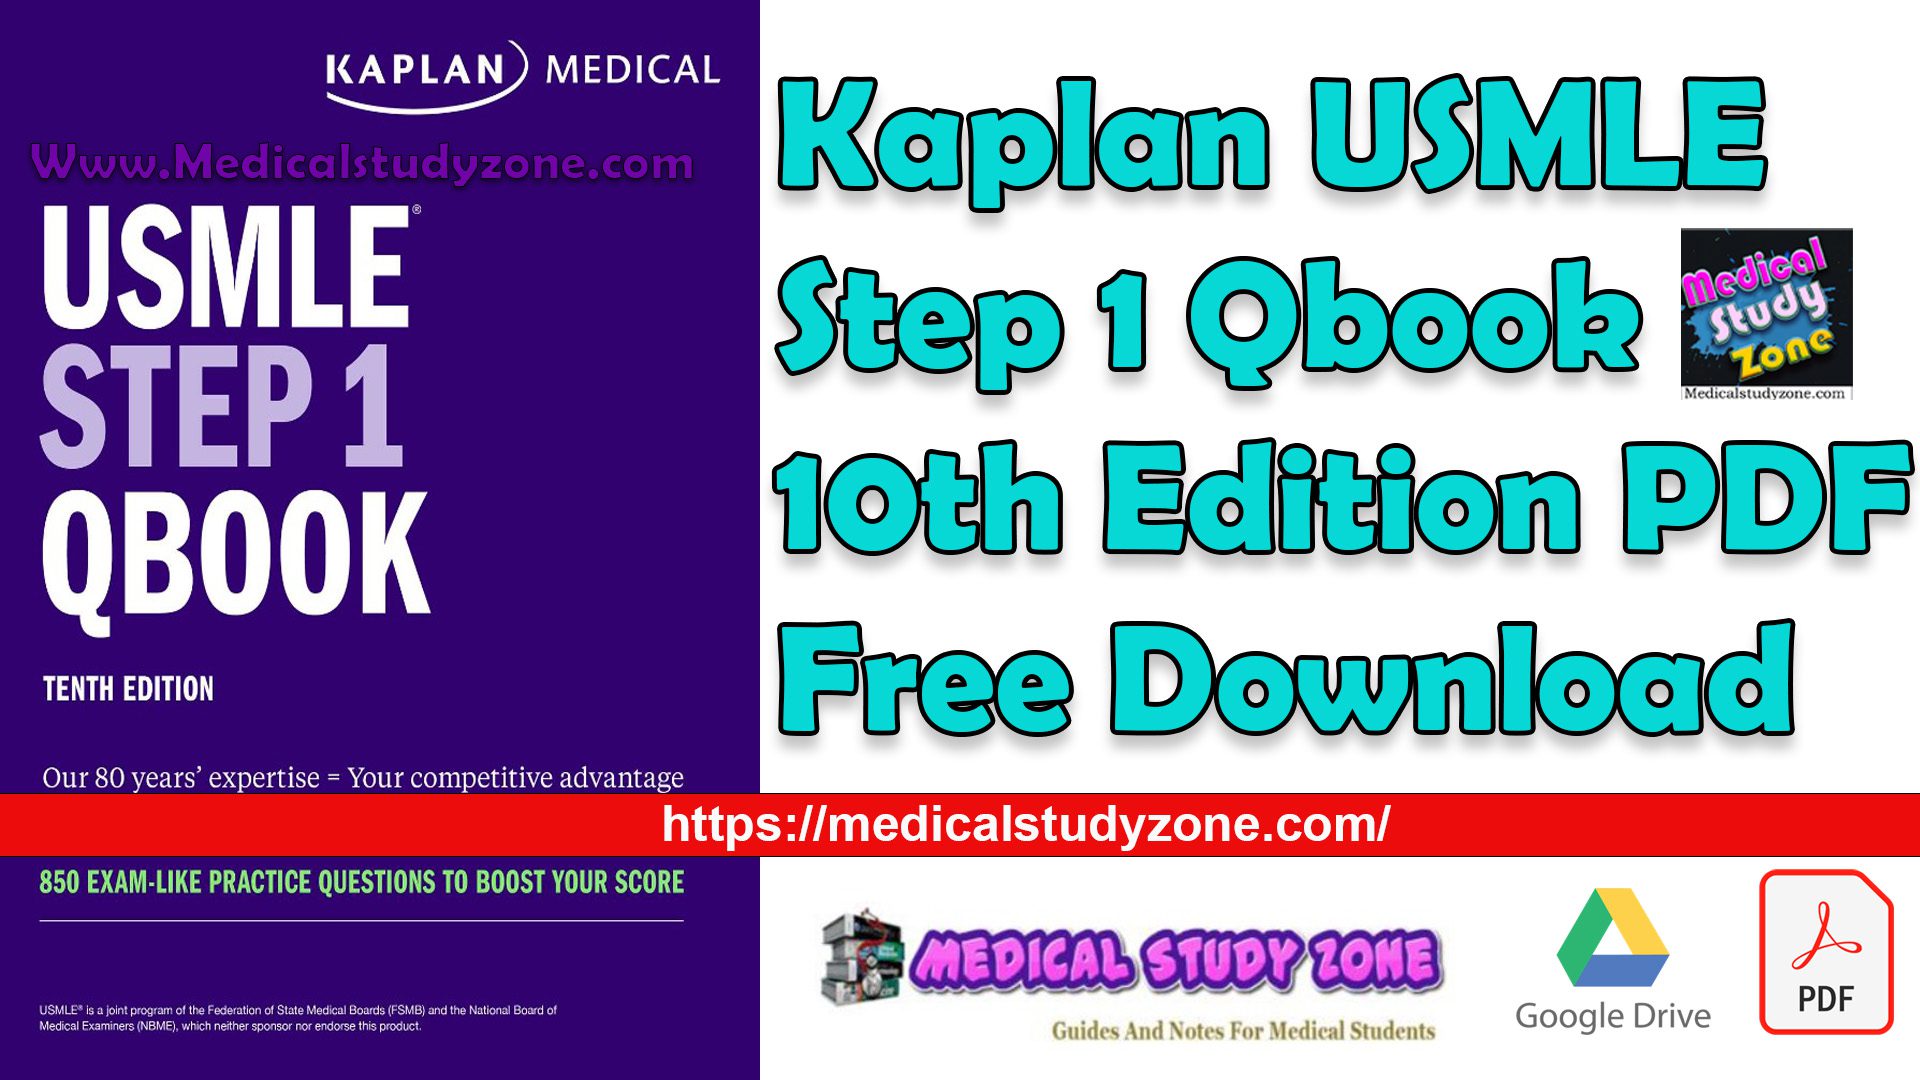 Kaplan USMLE Step 1 Qbook 10th Edition 2023 PDF Free Download